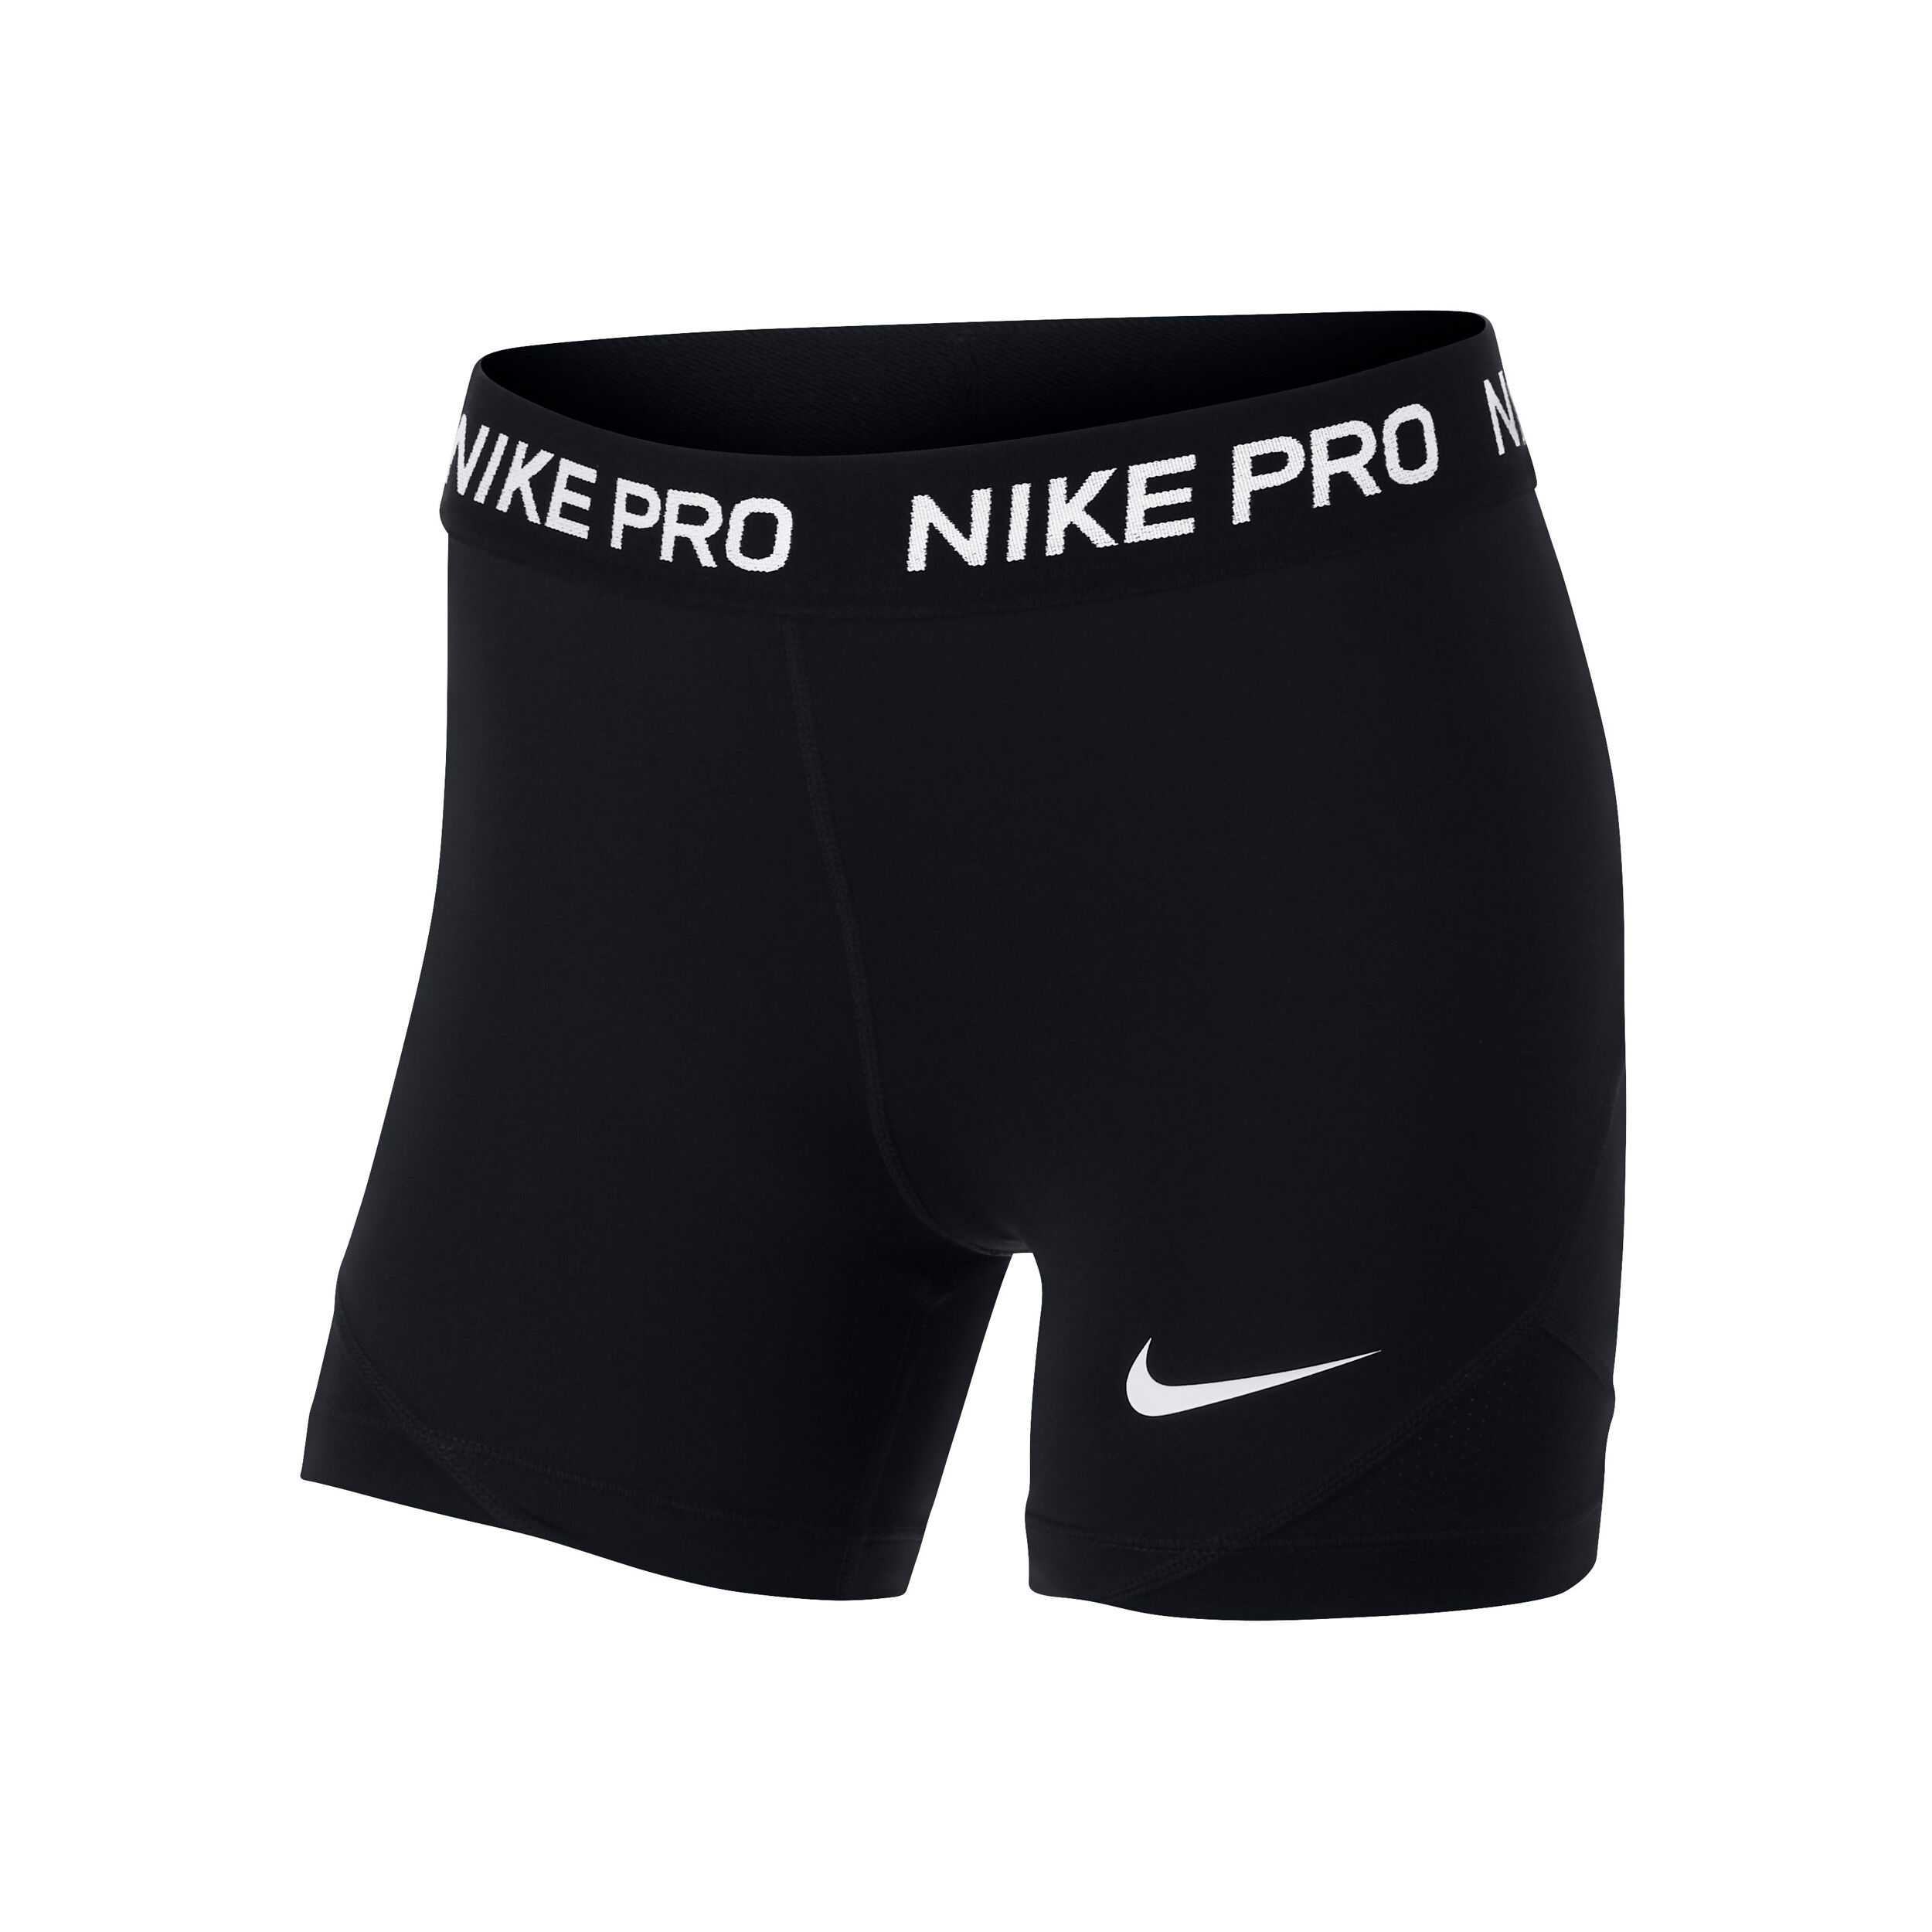 Мяч шортс. Nike Pro шорты. Kids Nike Pro shorts. USA Pro шорты. Small Kids Nike Pro shorts.